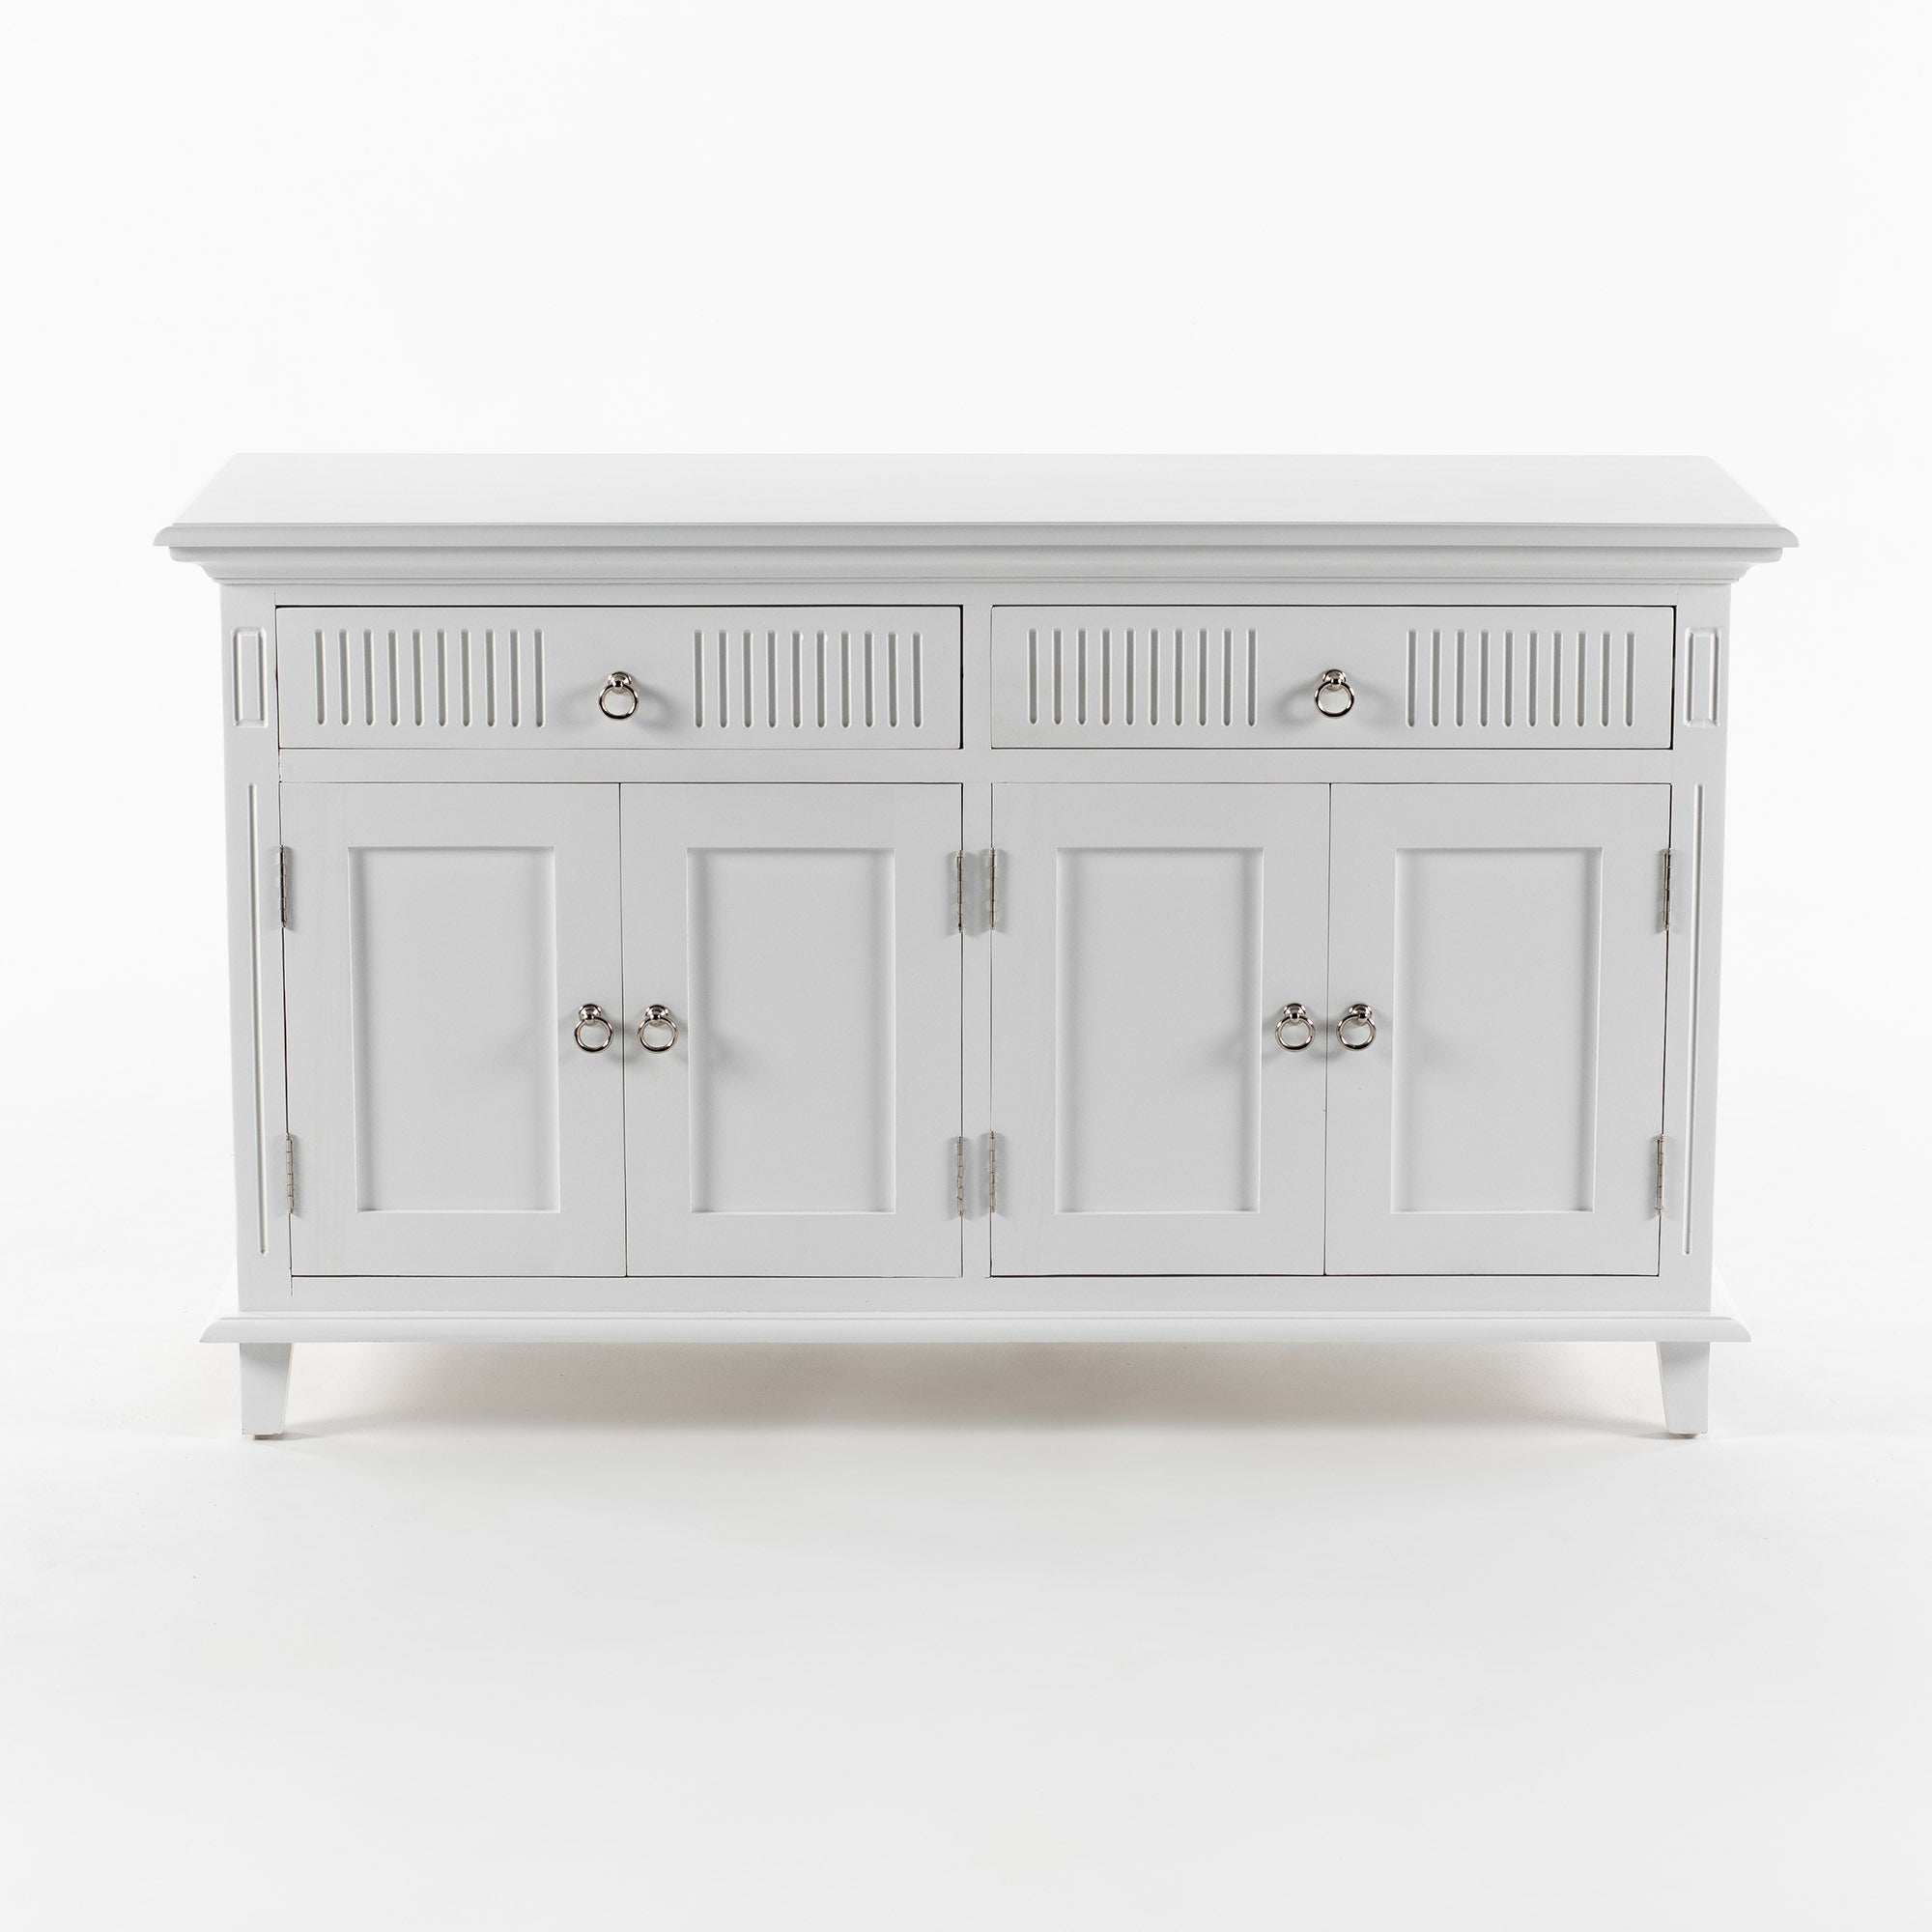 Skansen Nordic Design Classic White Buffet with 4 Doors